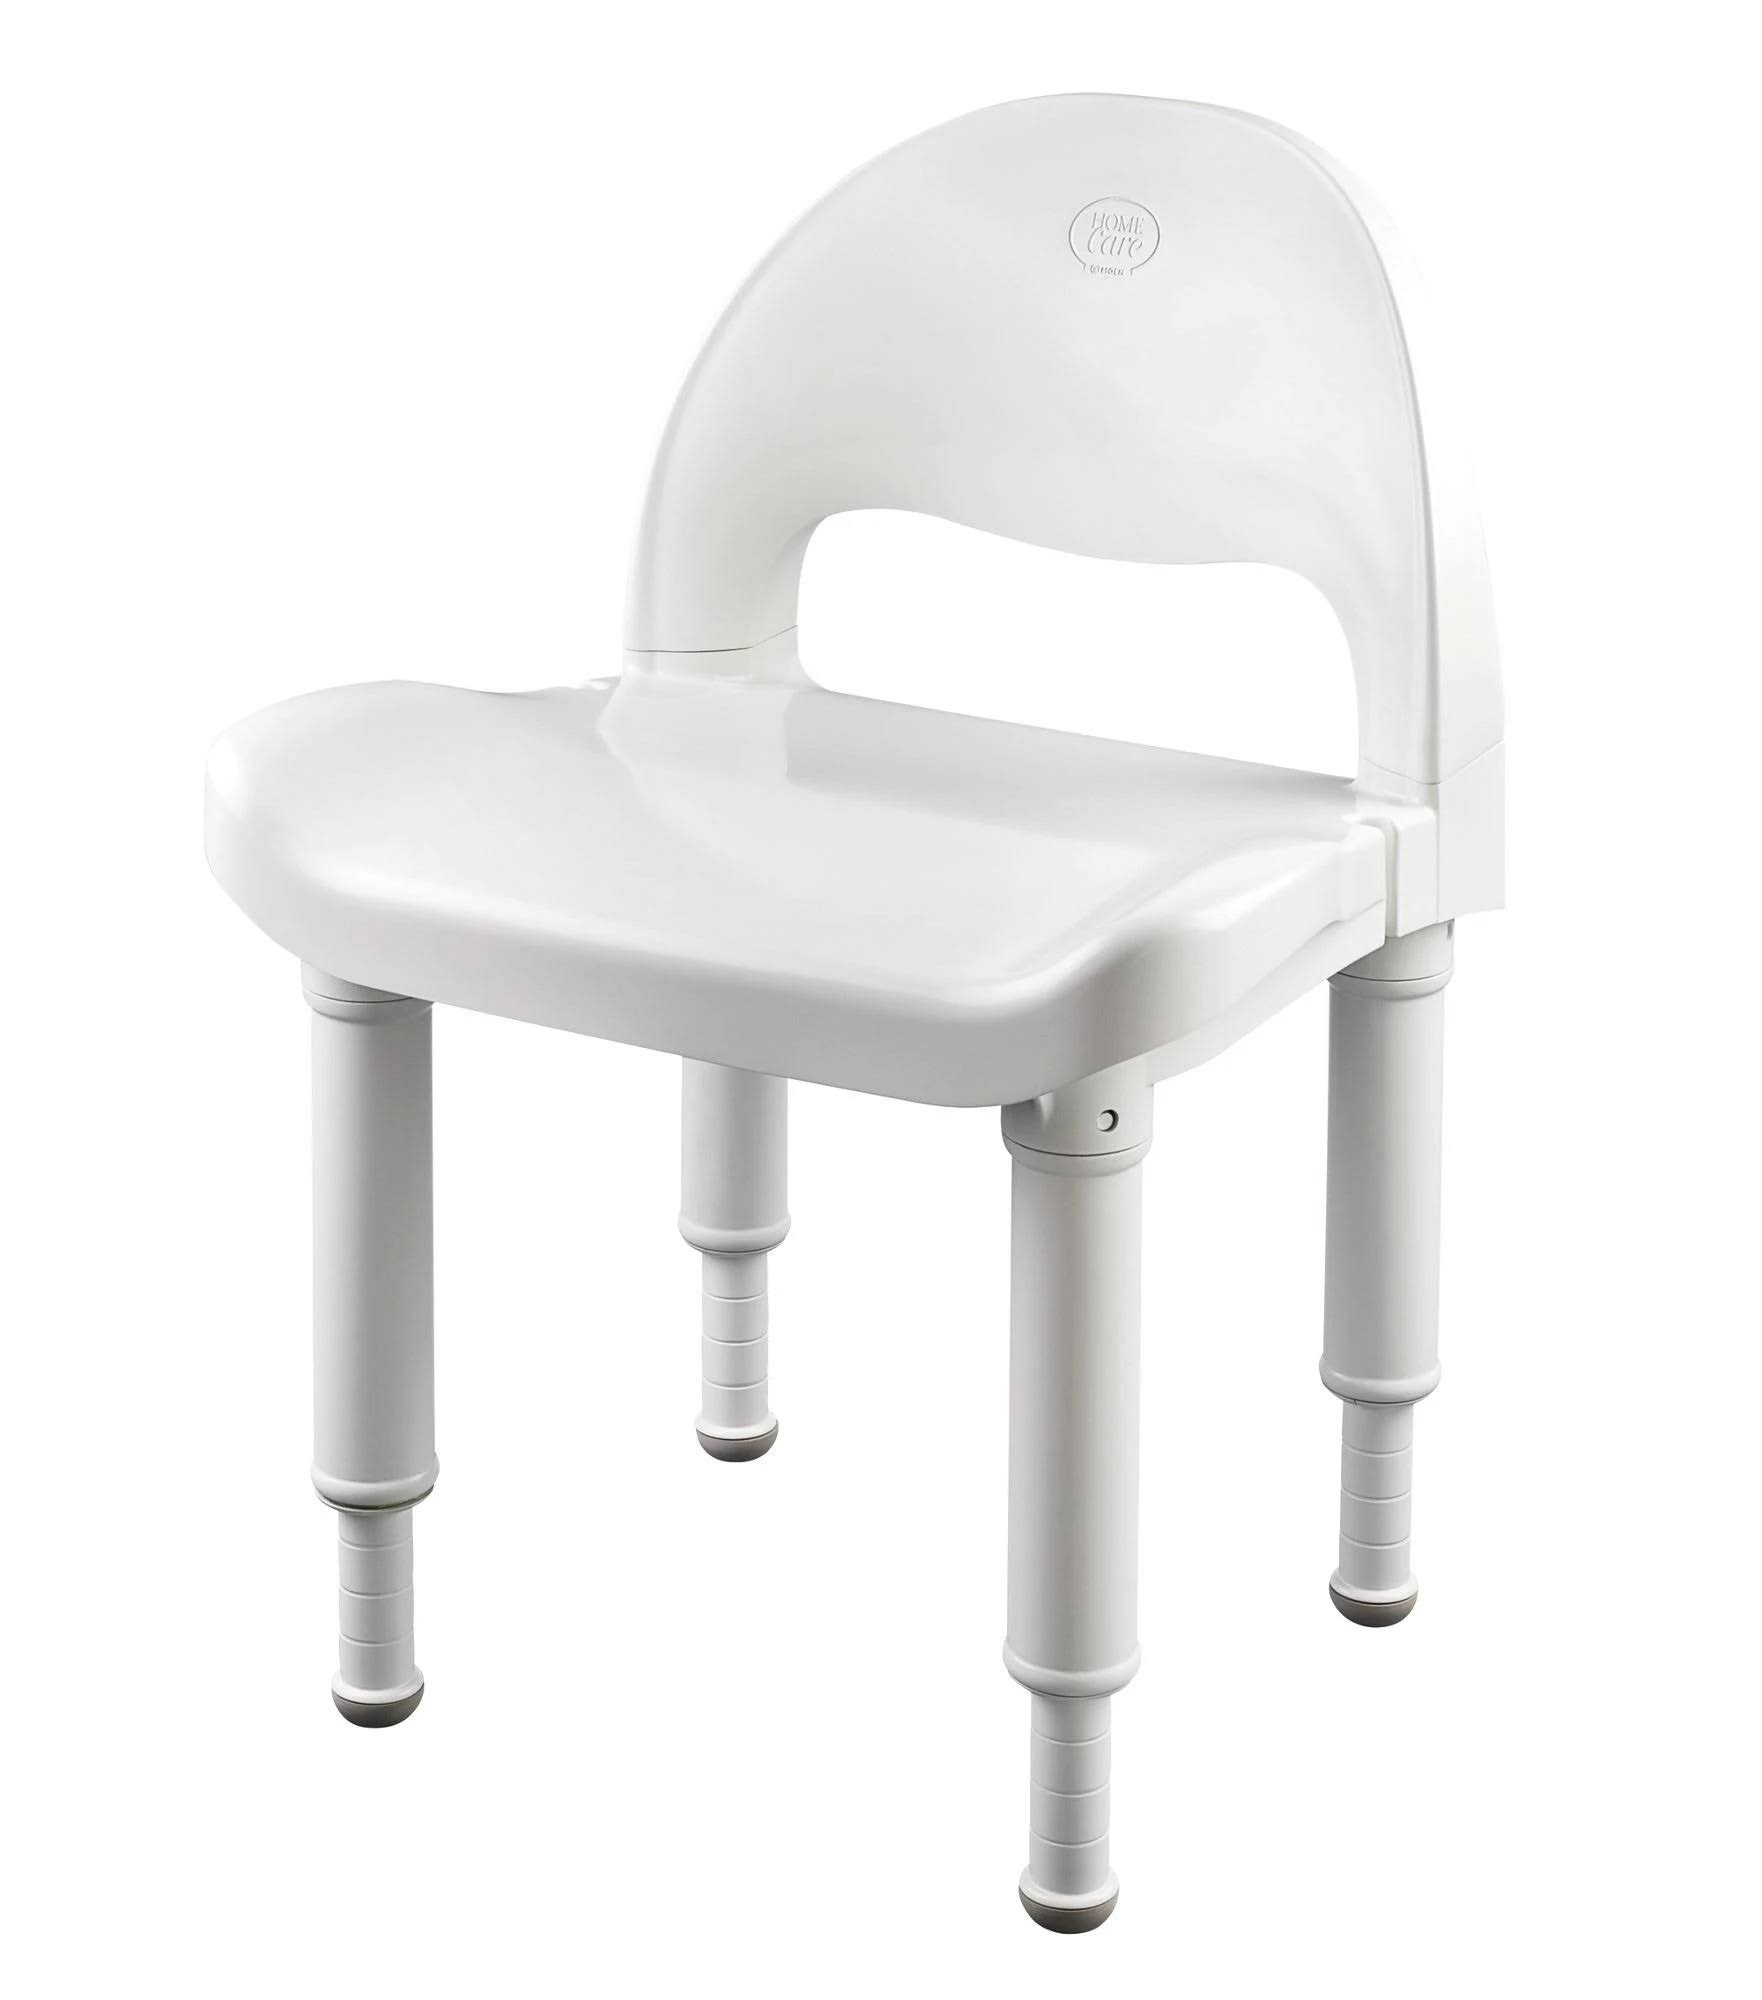 Moen Home Care Shower Chair - Glacier